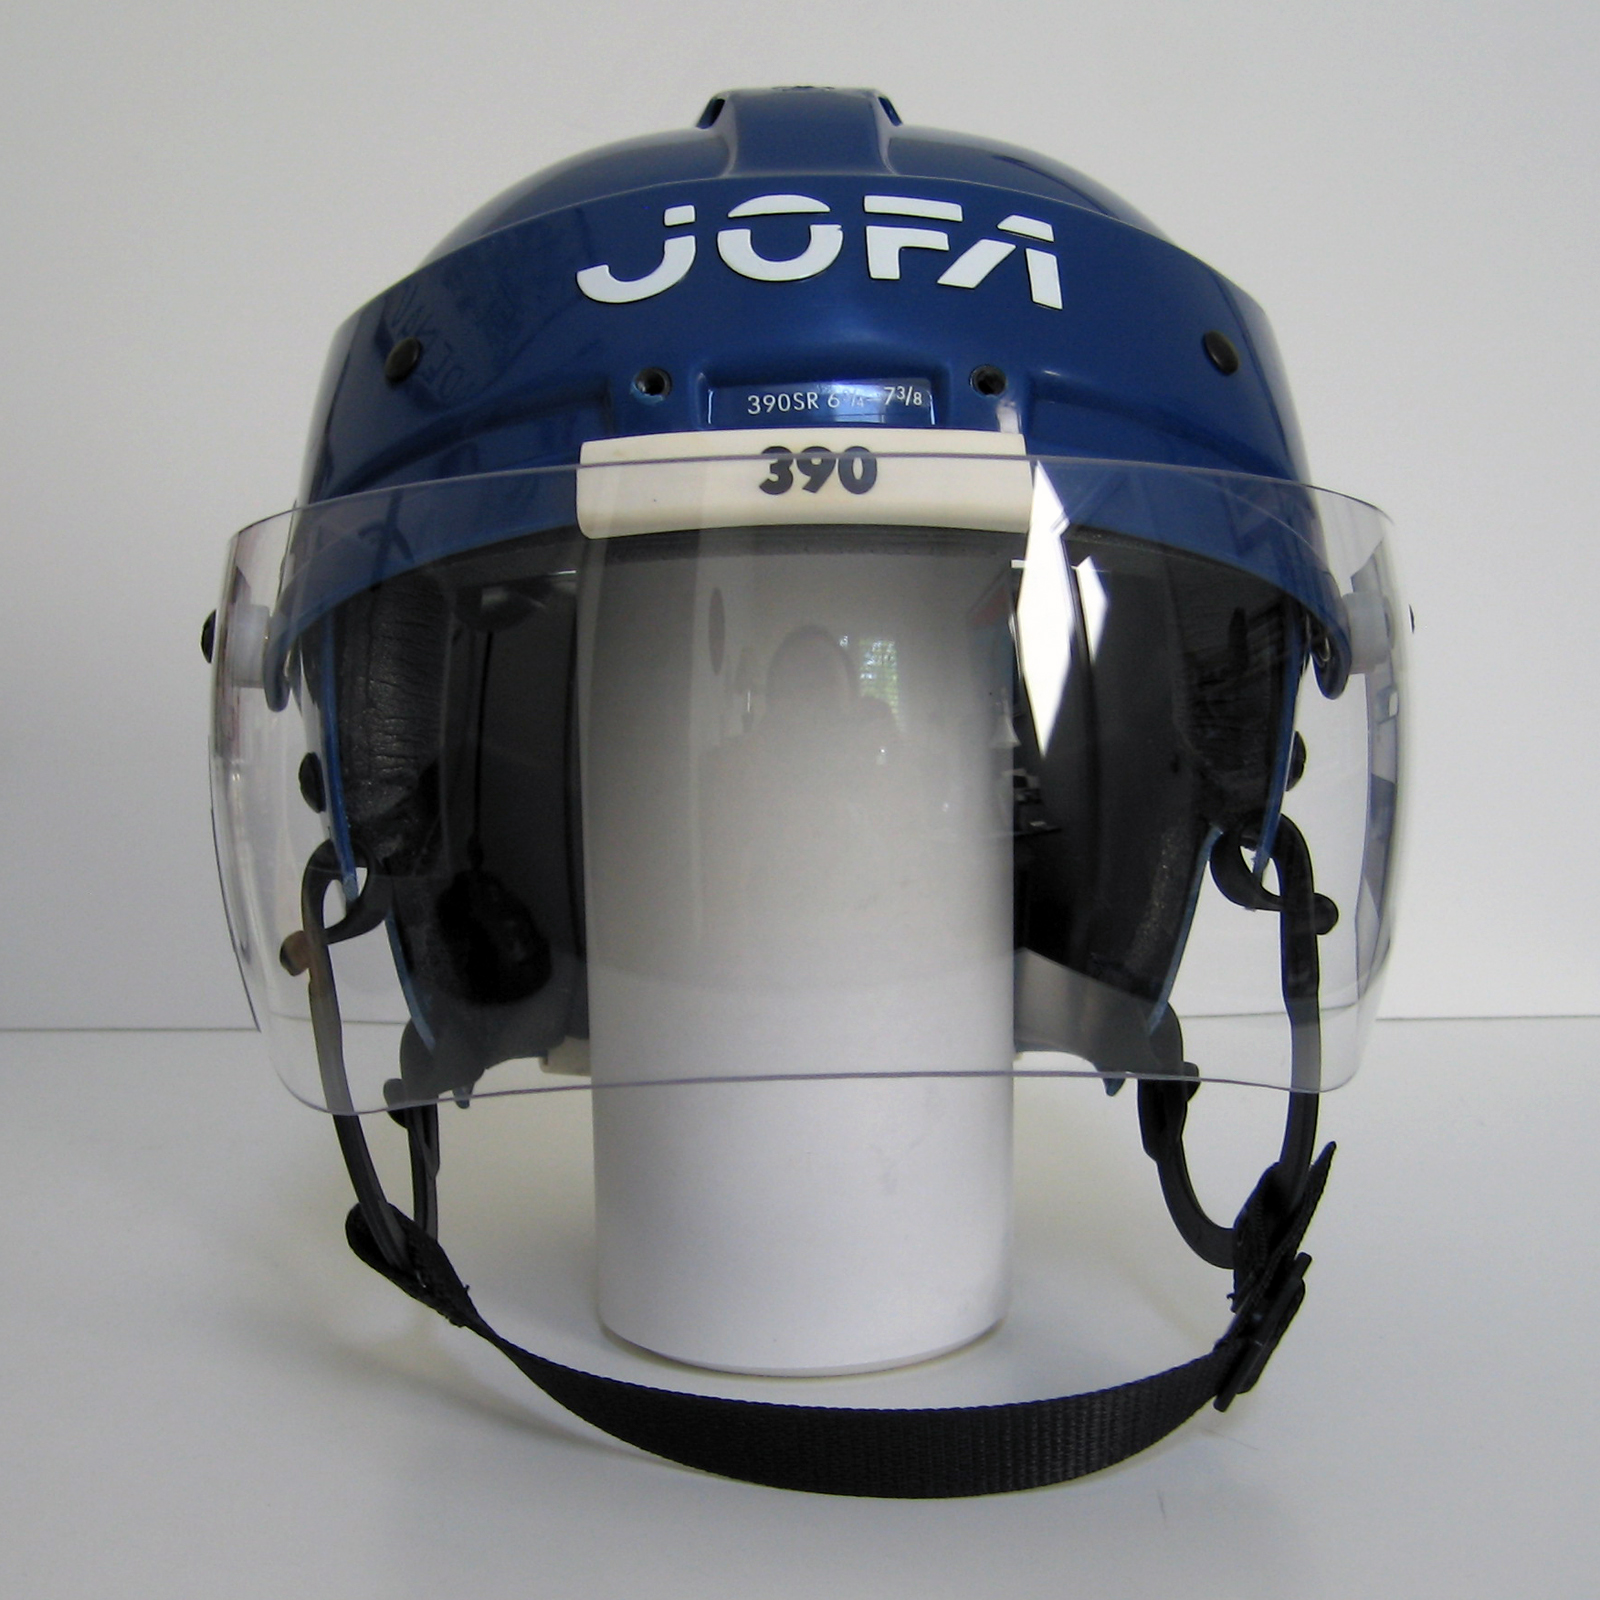 jofa-helmets-halos-of-hockey-teemu-selanne-olympic-jofa-helmet